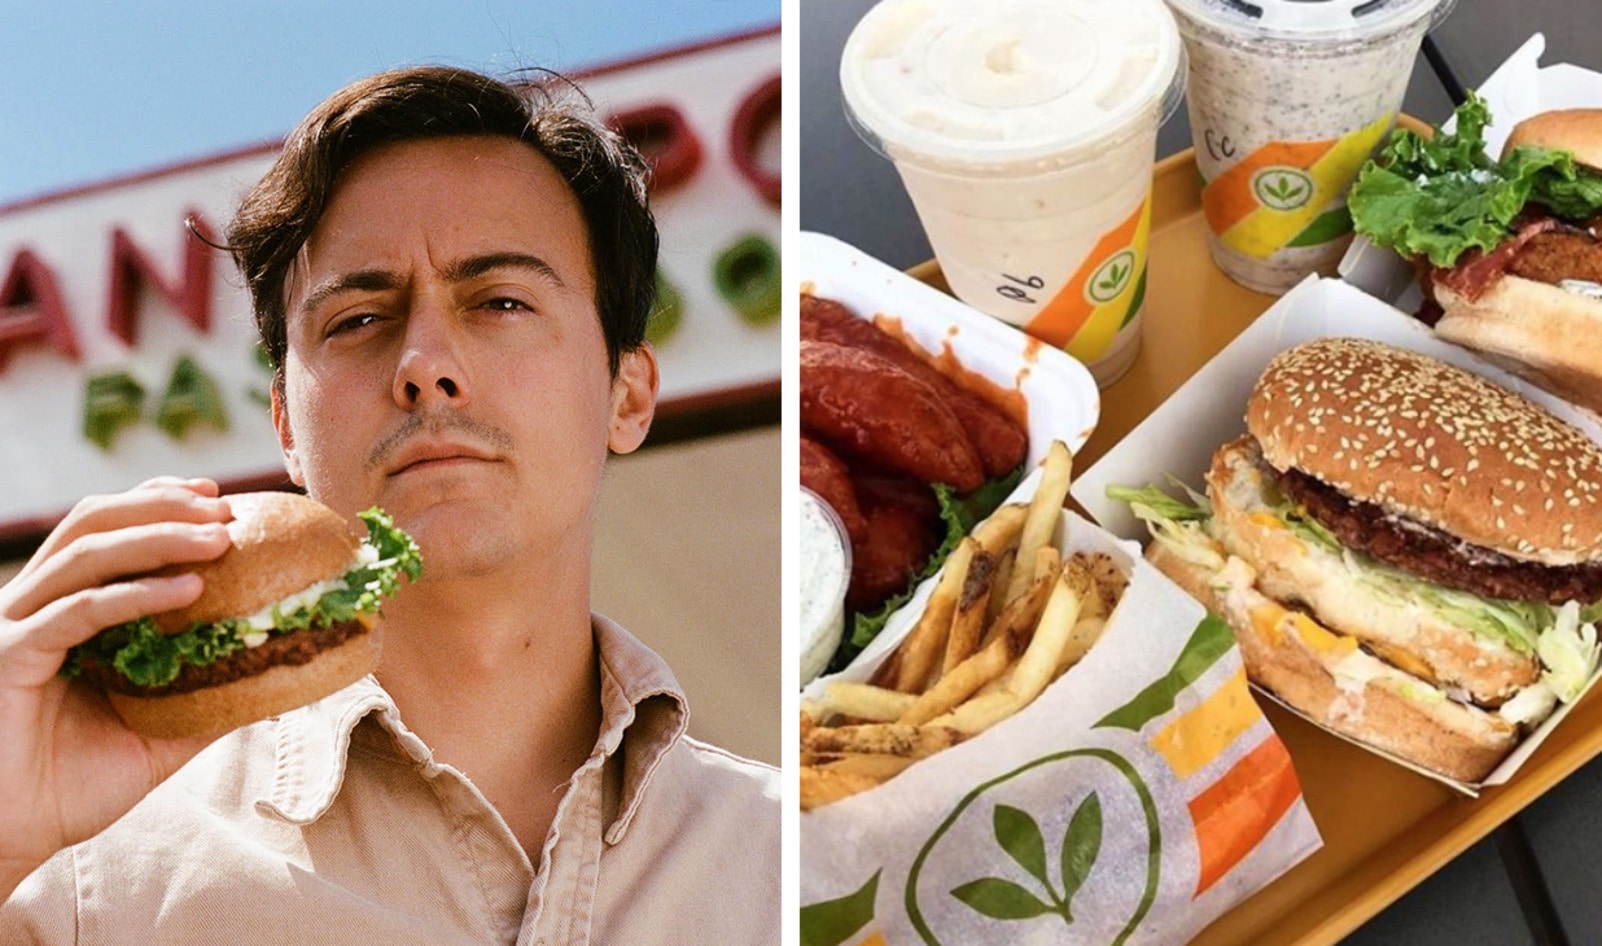 Vegan Fast-Food Entrepreneur Makes Forbes’ “30 Under 30” List&nbsp;